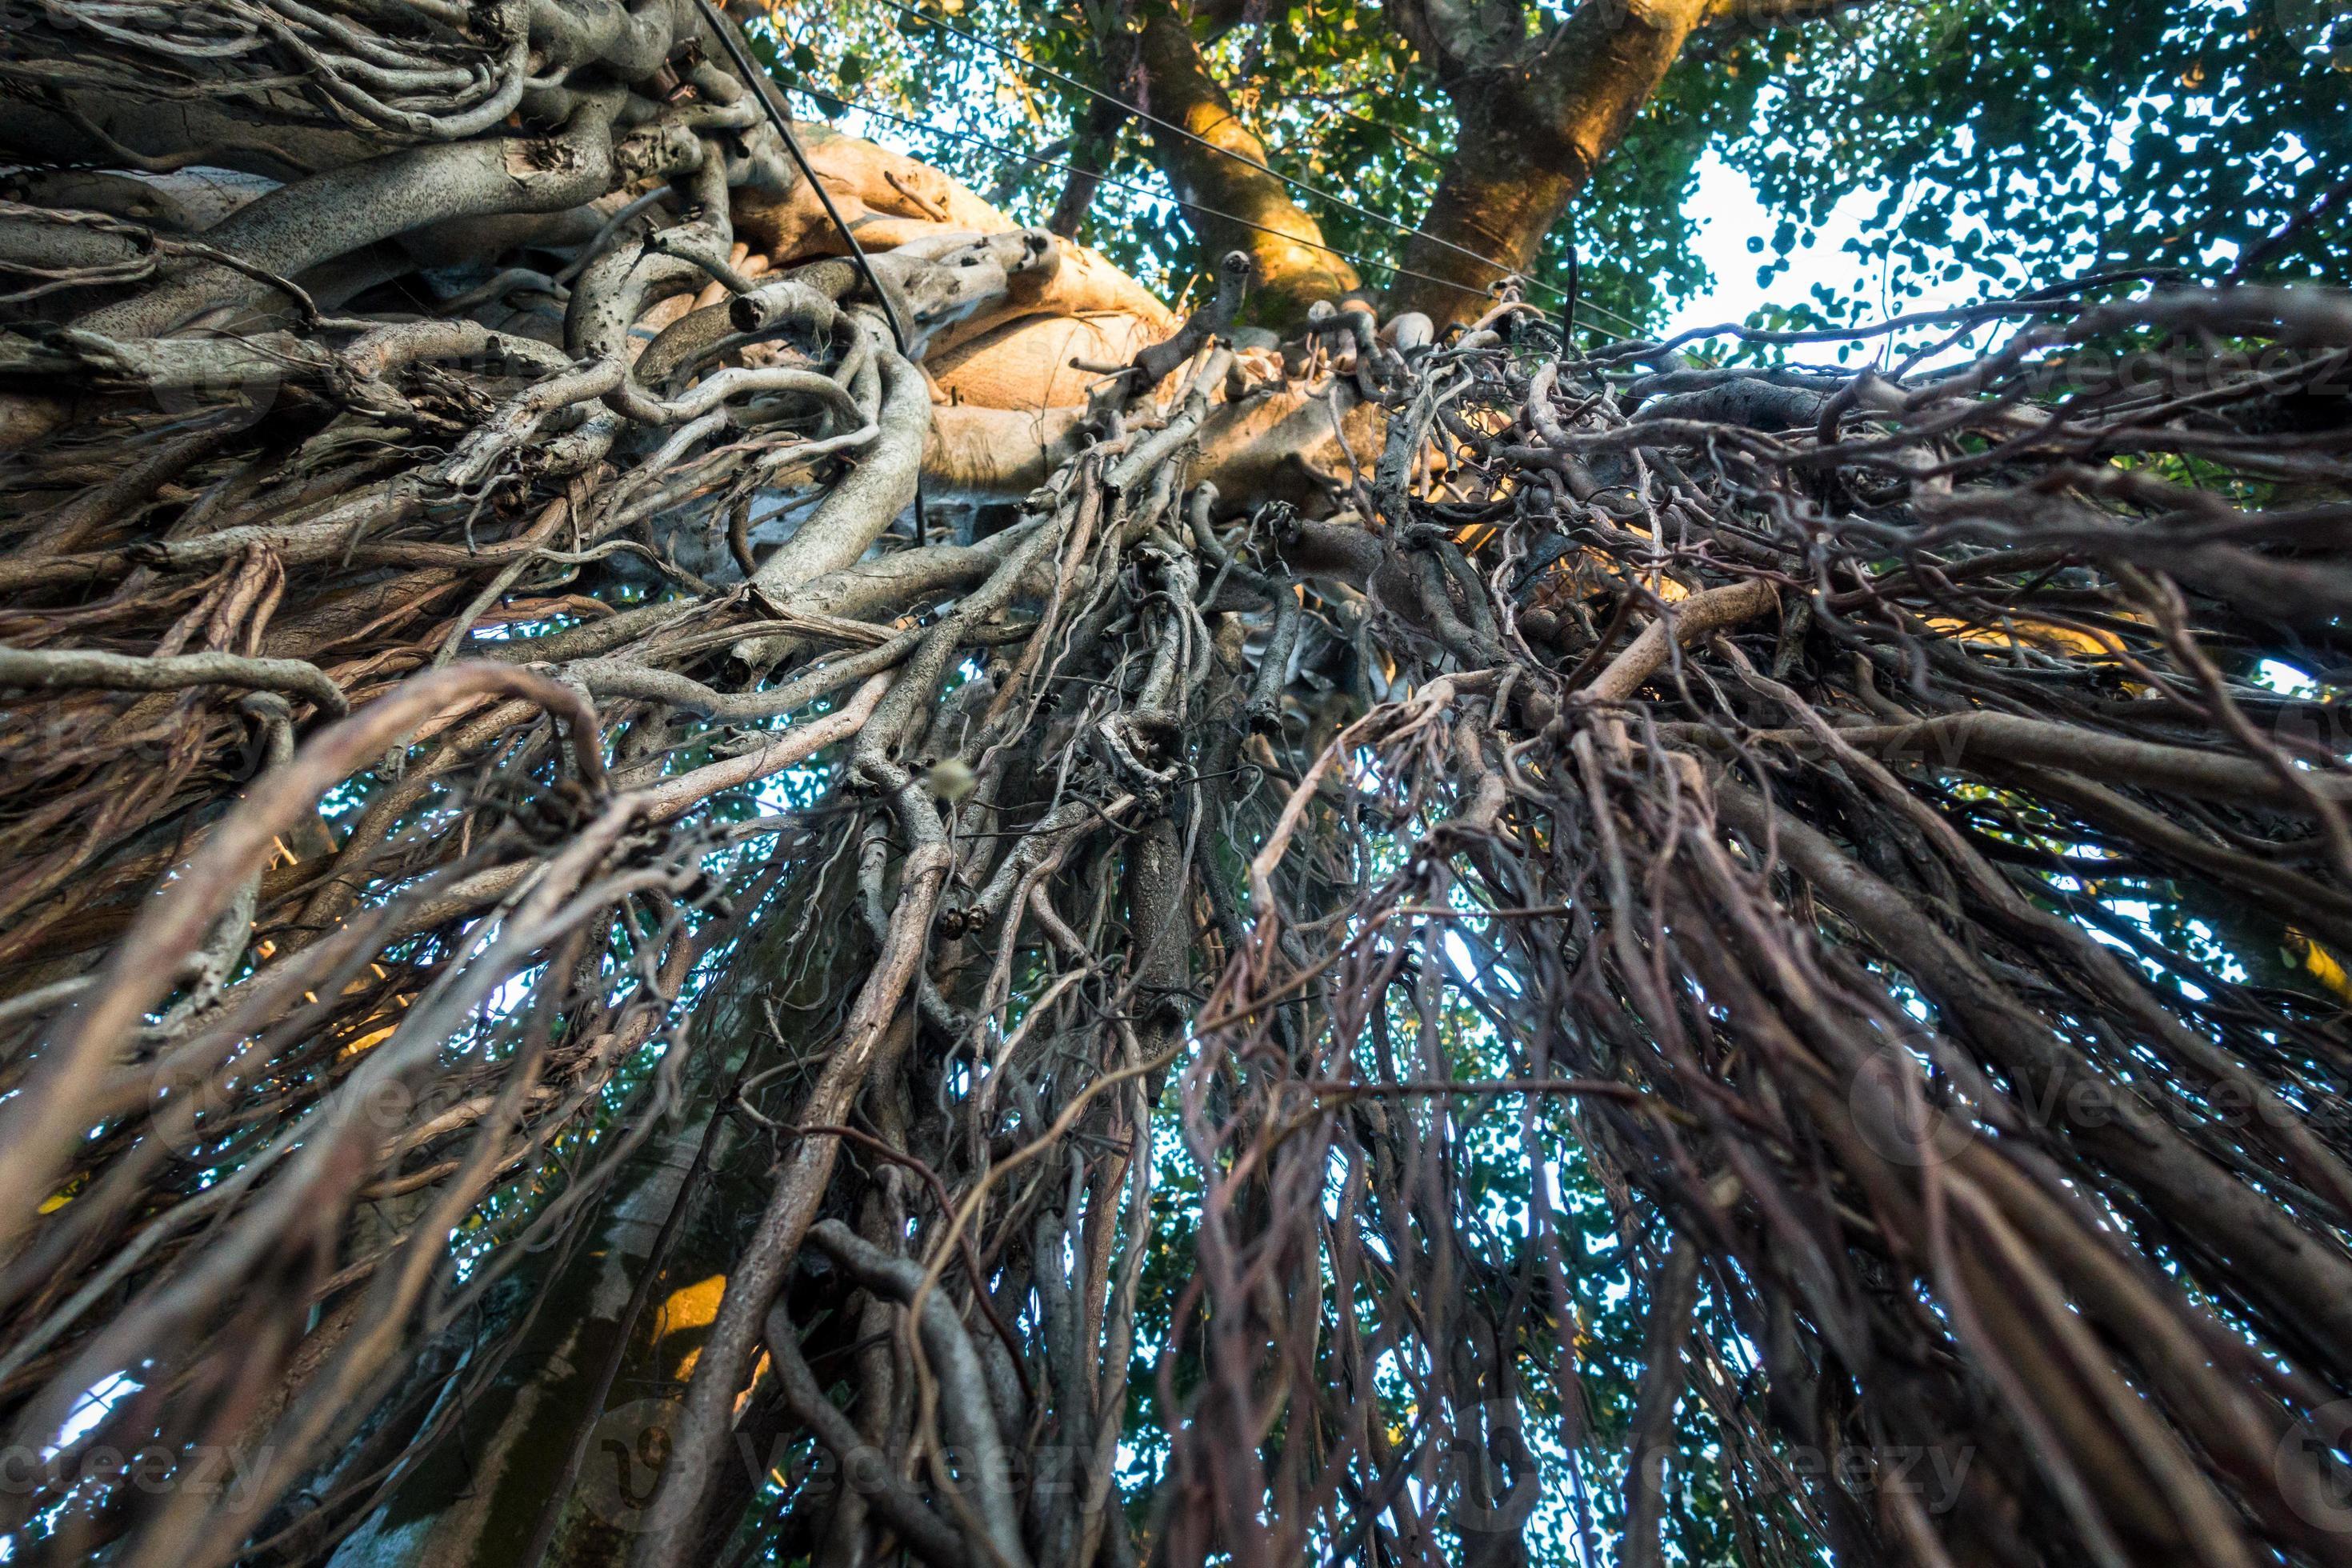 basura Perú Interpretación un tiro hacia arriba de las raíces colgantes del árbol banyan, ficus  benghalensis. uttarakhand india. 7974018 Foto de stock en Vecteezy